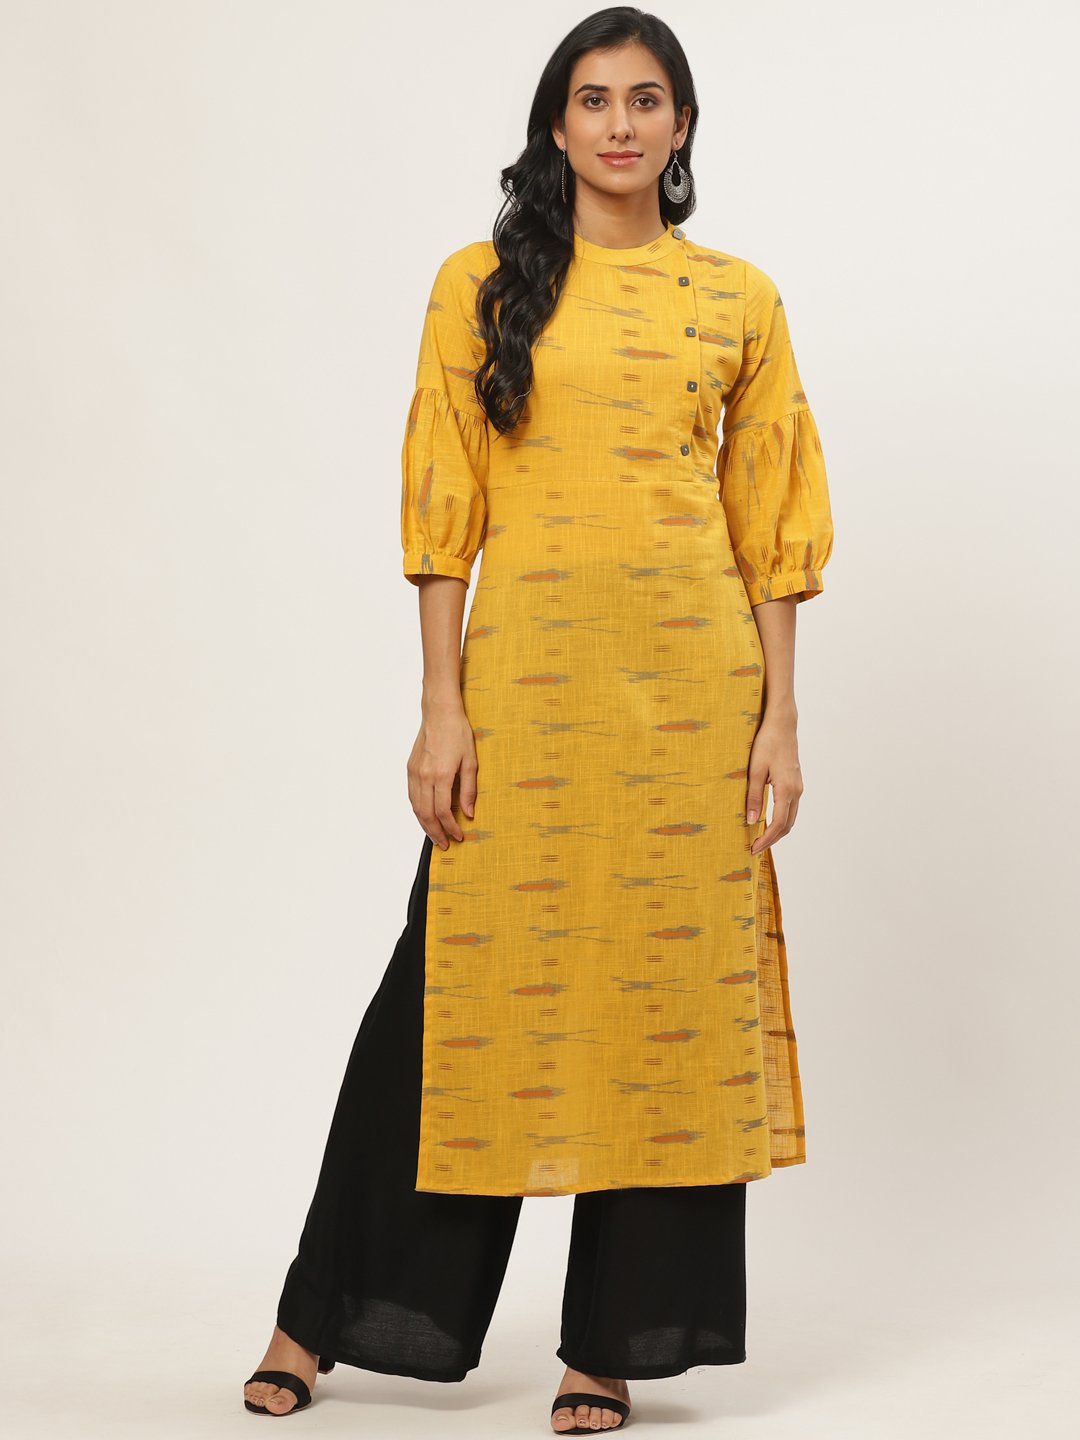 Women's Mustard Calf Length Three-Quarter Sleeves Straight Abstract Yoke Design Cotton Kurta - Nayo Clothing